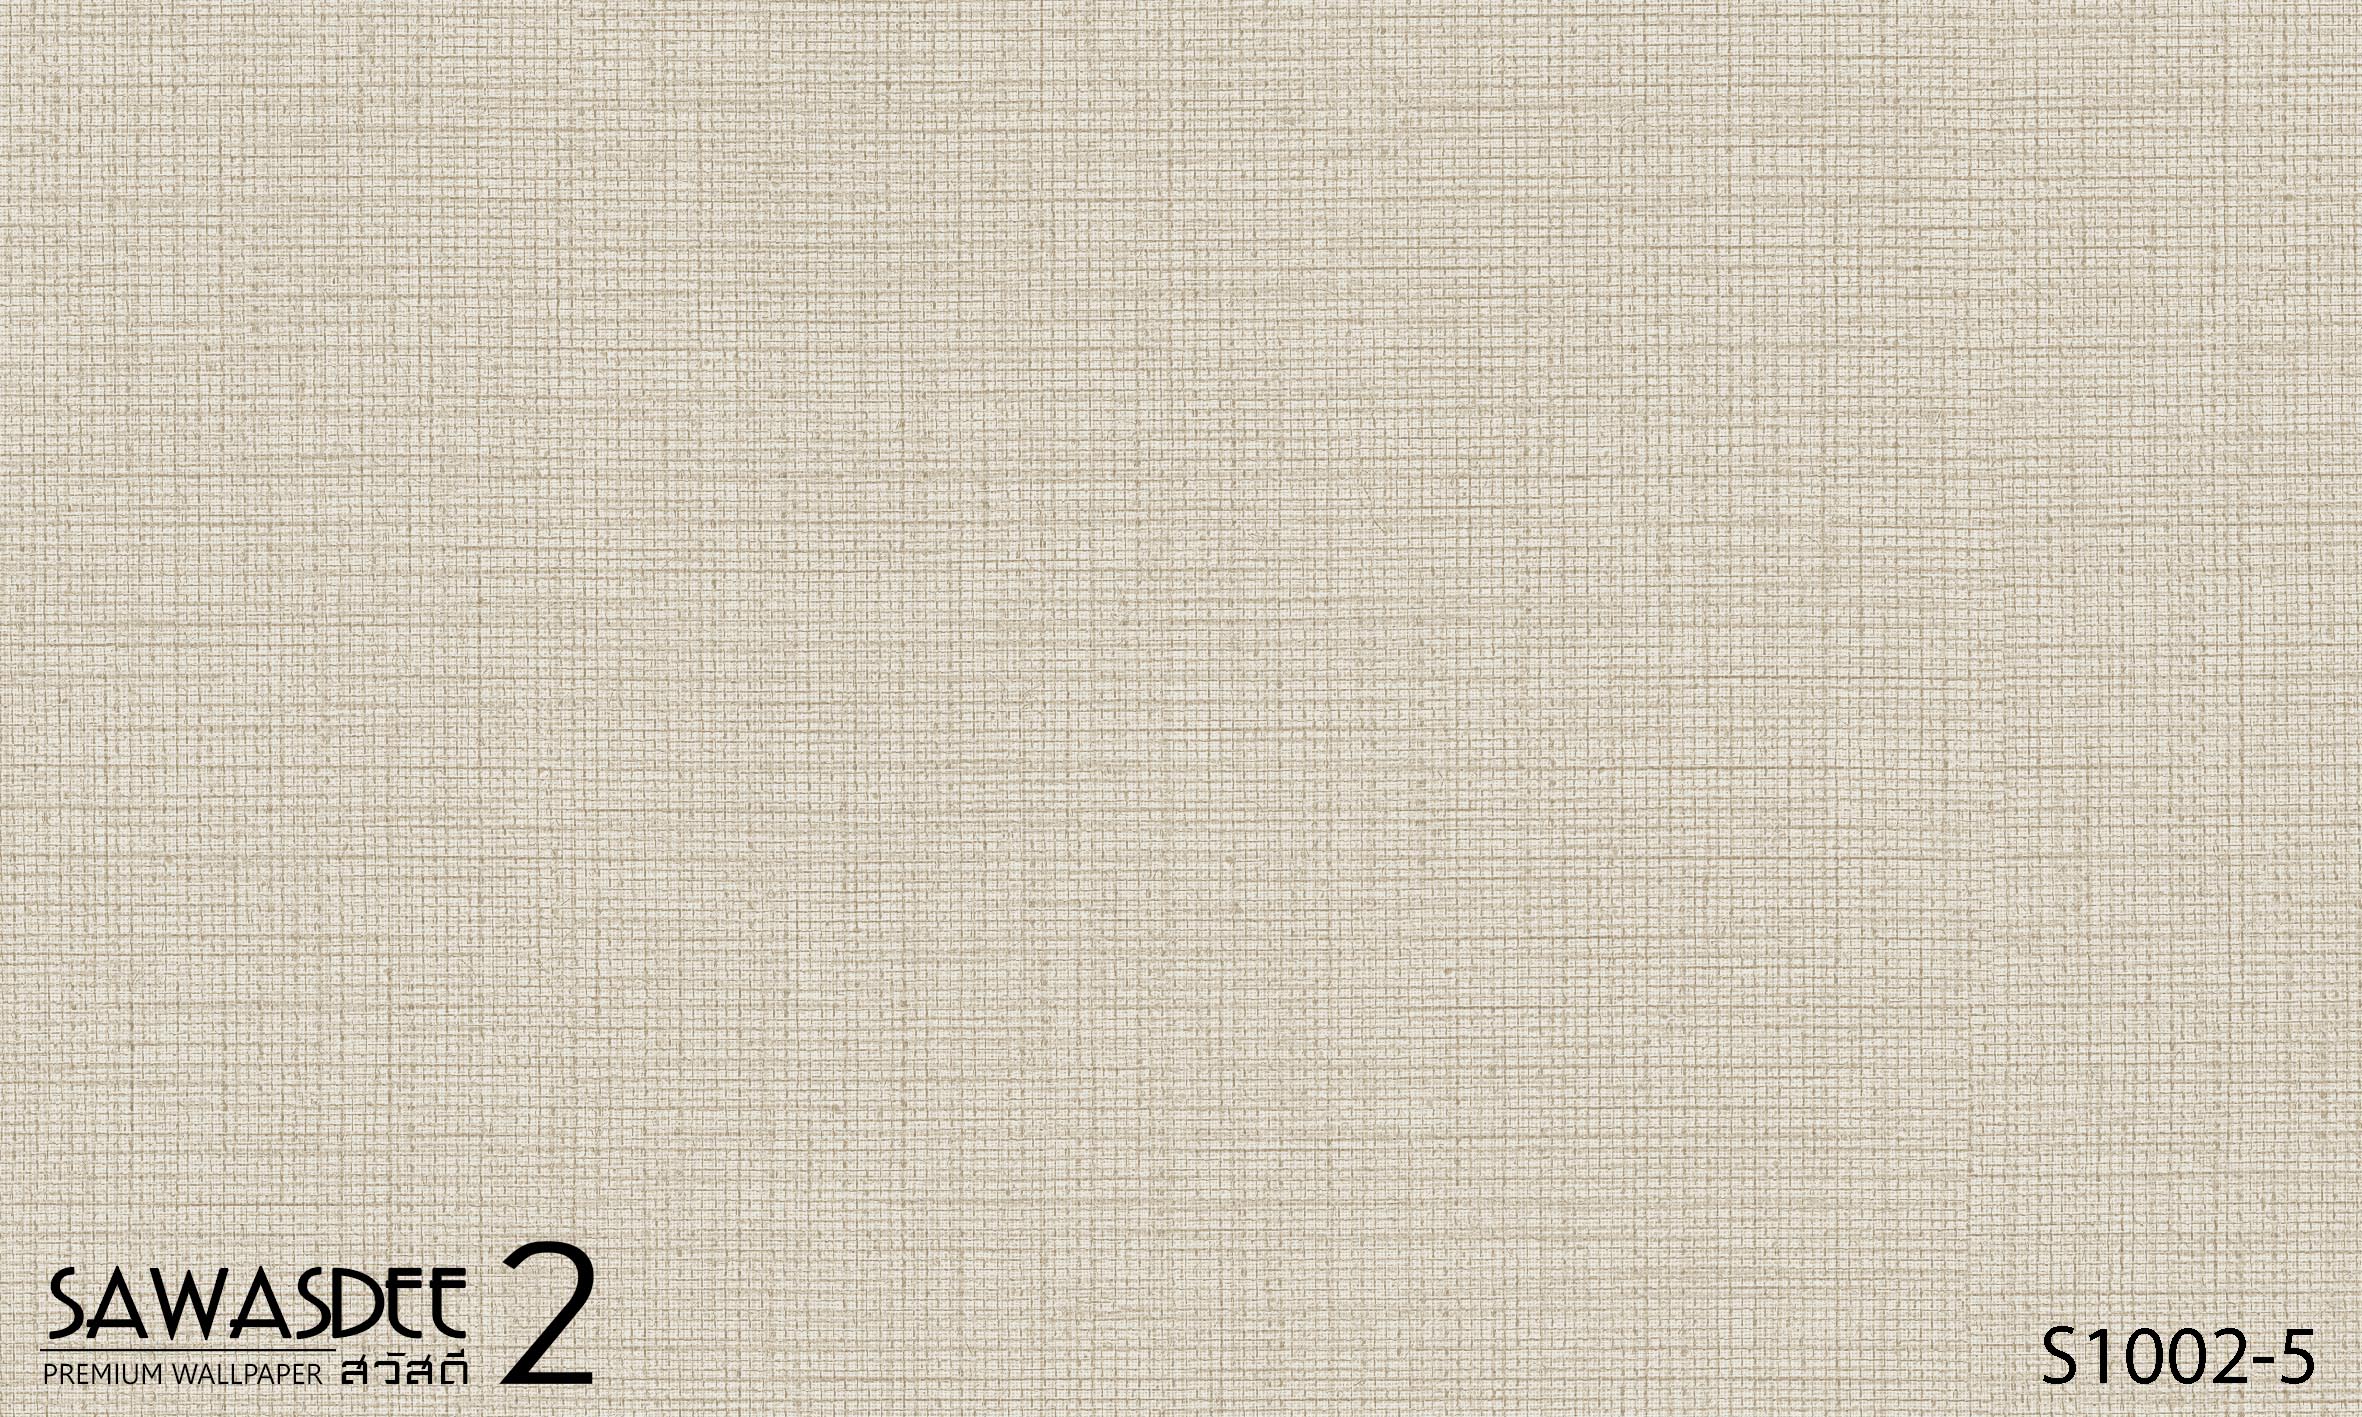 Wallpaper (SAWASDEE 2) S1002-5